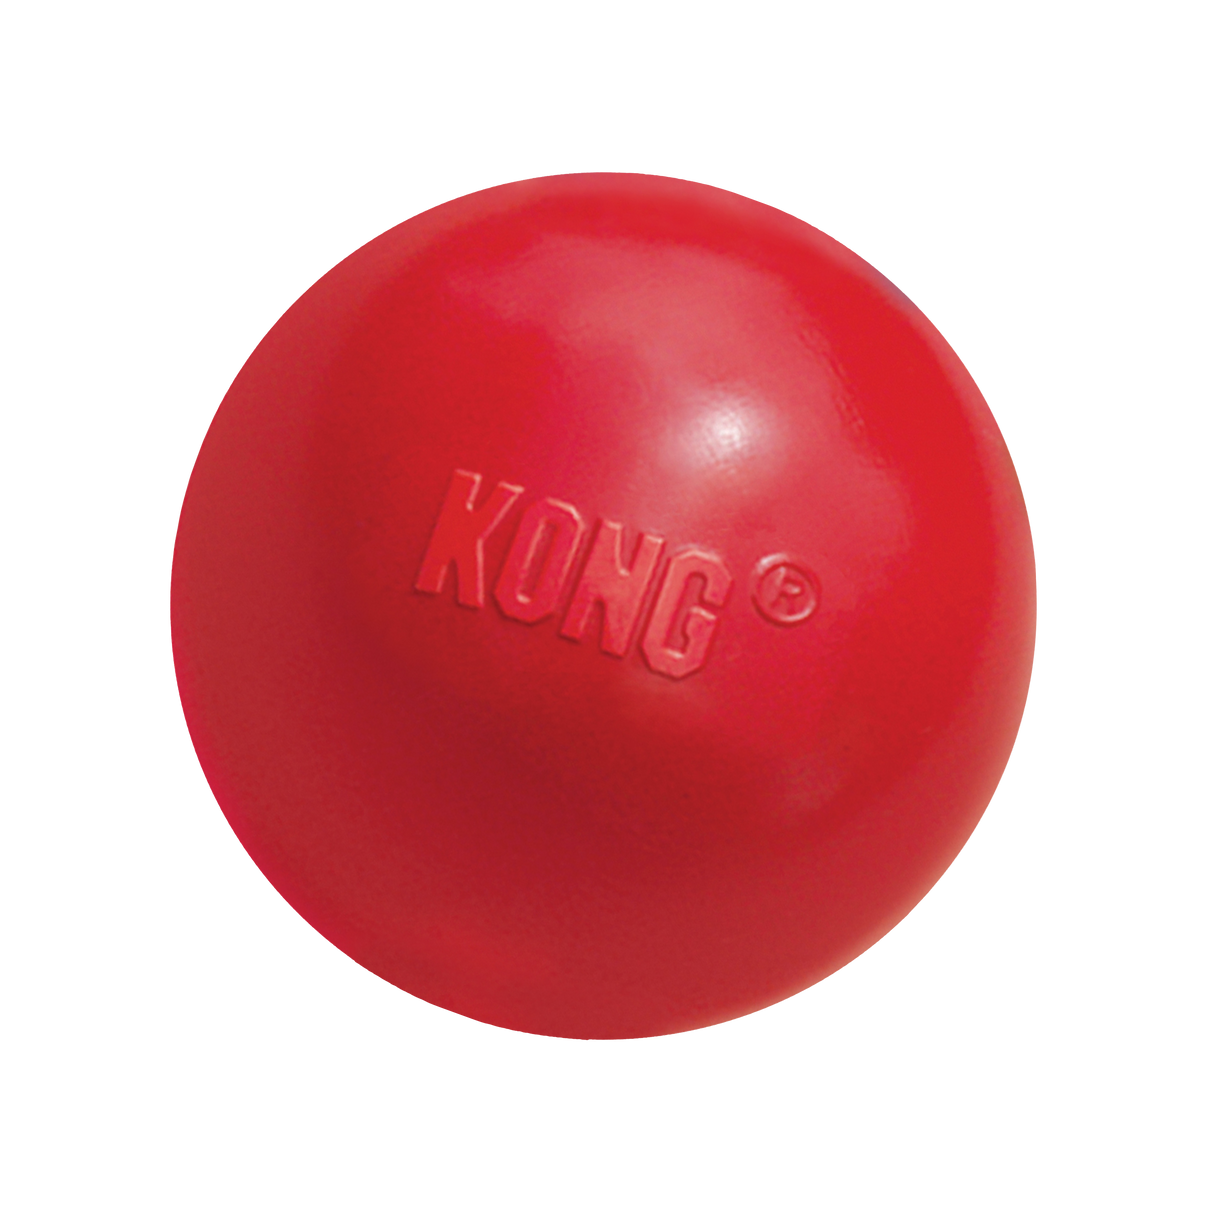 KONG Ball #size_s